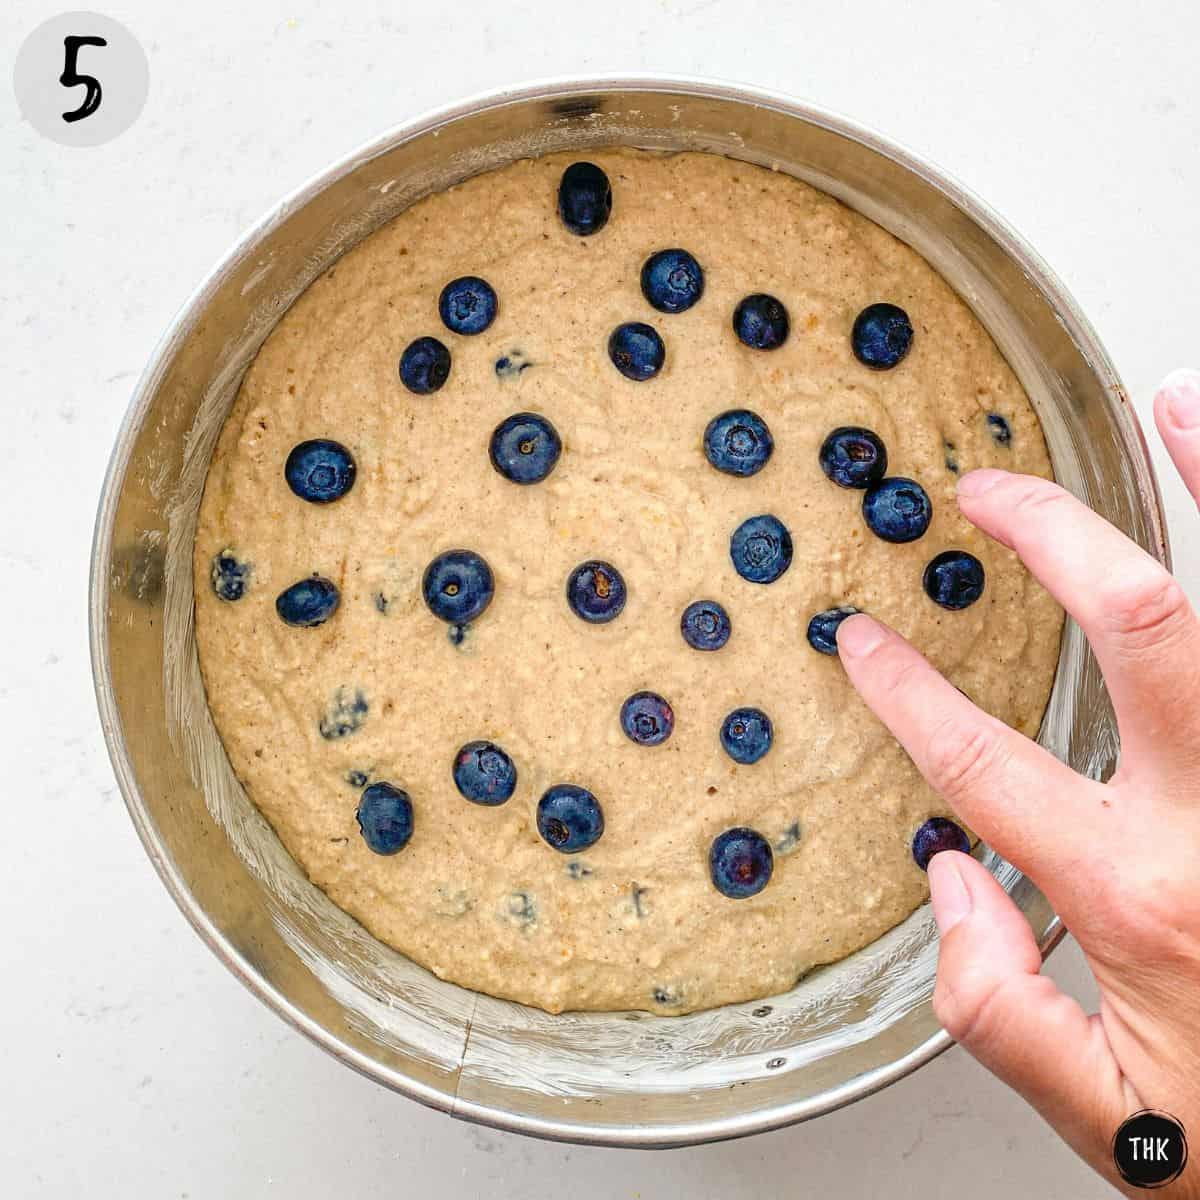 Cake batter in cake pan and finger poking blueberries inside it.